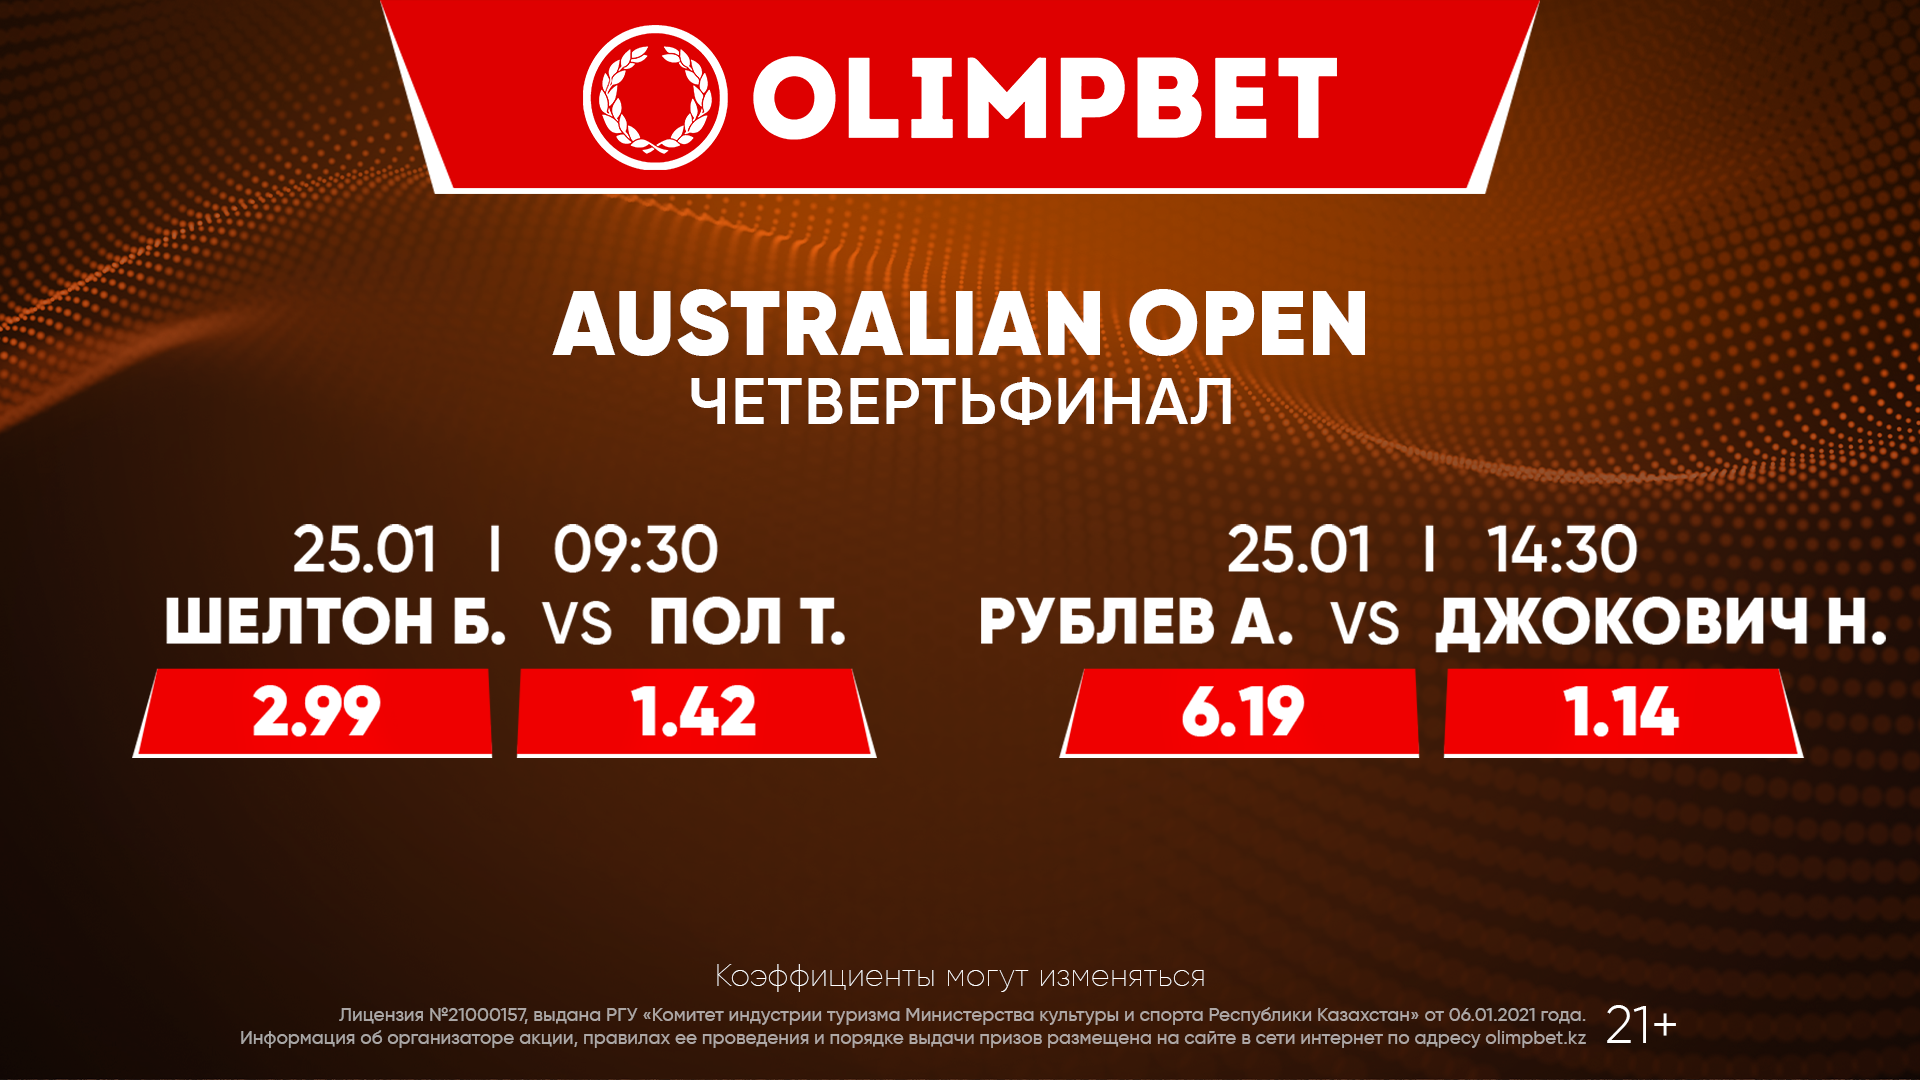 Каков будет исход противостояния Джоковича и Рублева на Australian Open?  – расклады Olimpbet